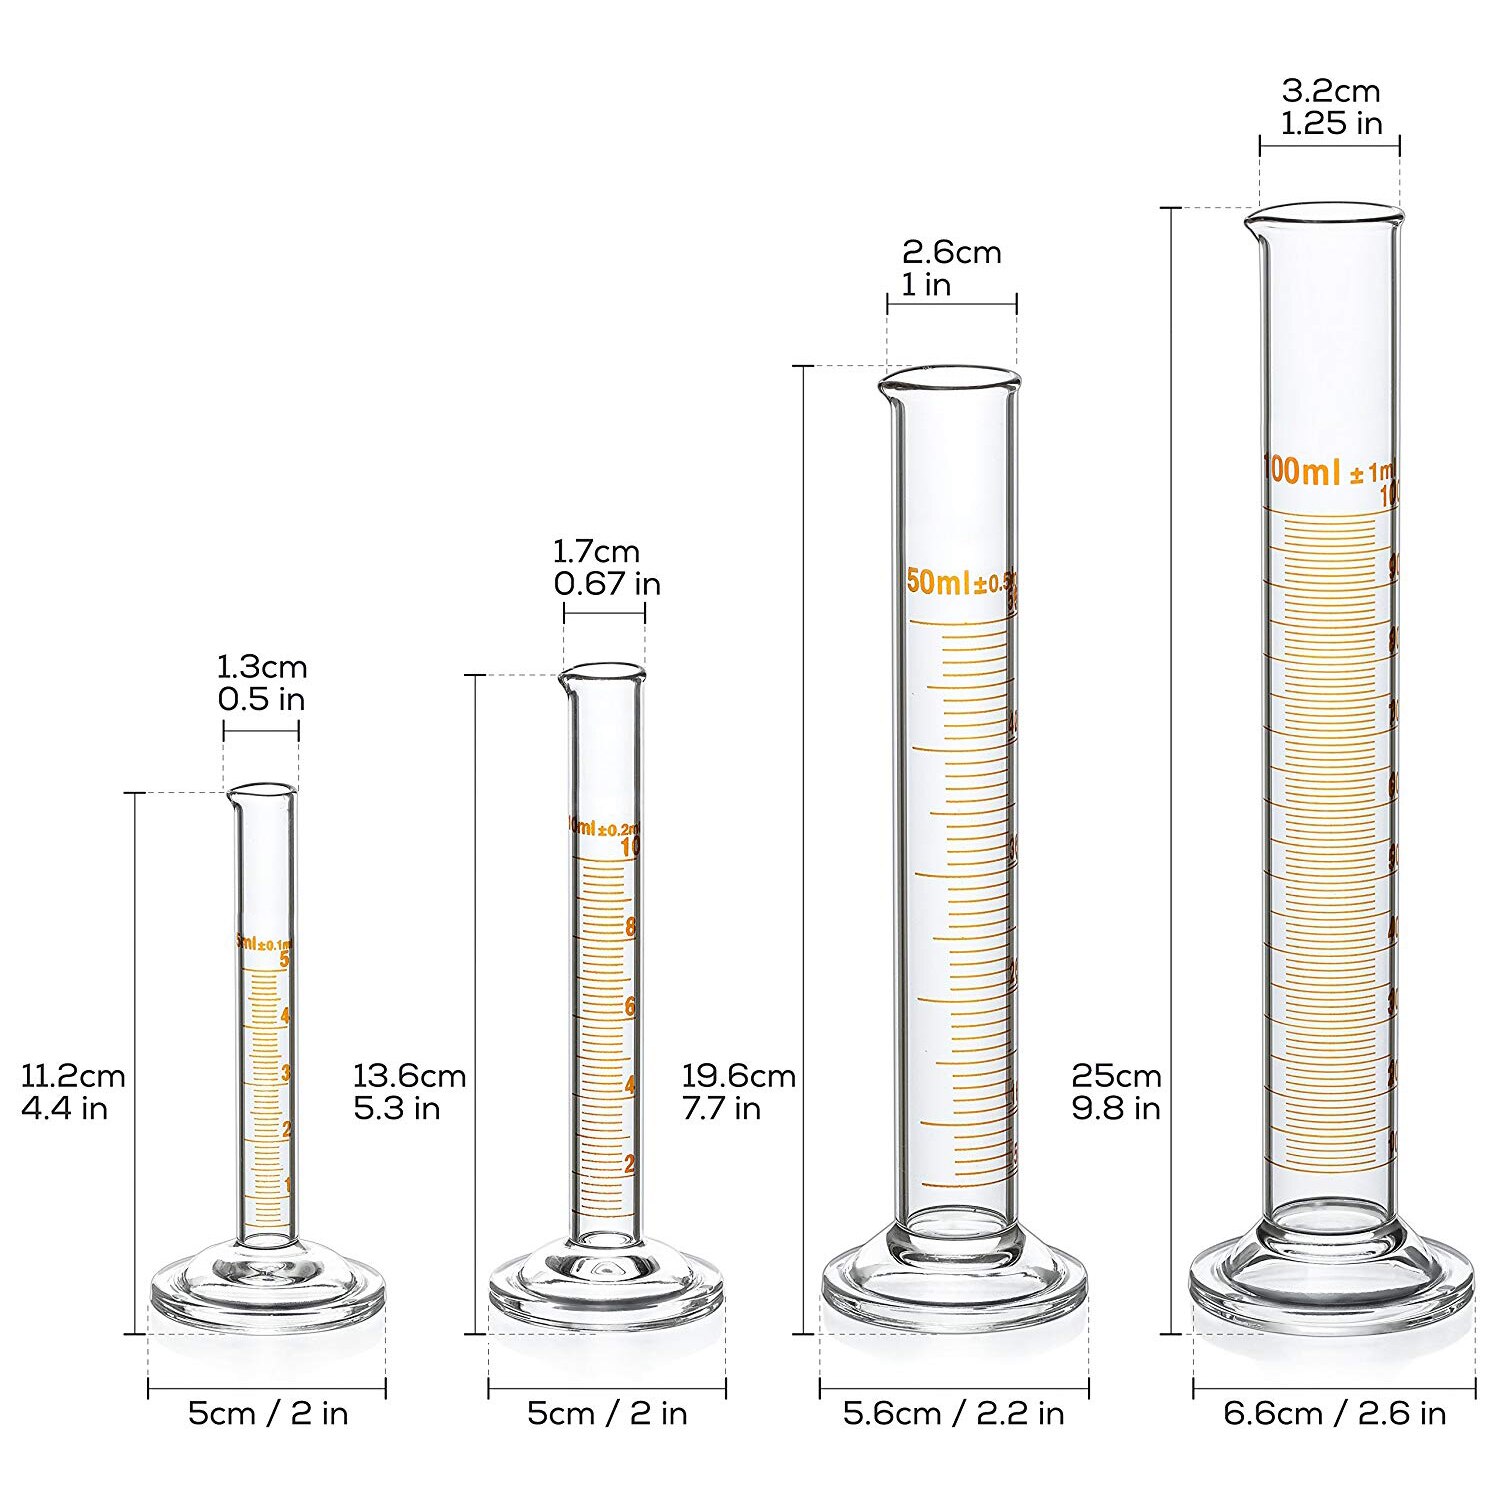 Ppyy  -4 målecylinder  - 5ml, 10ml, 50ml, 100ml -  premiumglas - indeholder 2 rengøringsbørster  + 3 x 1ml glaspipetter